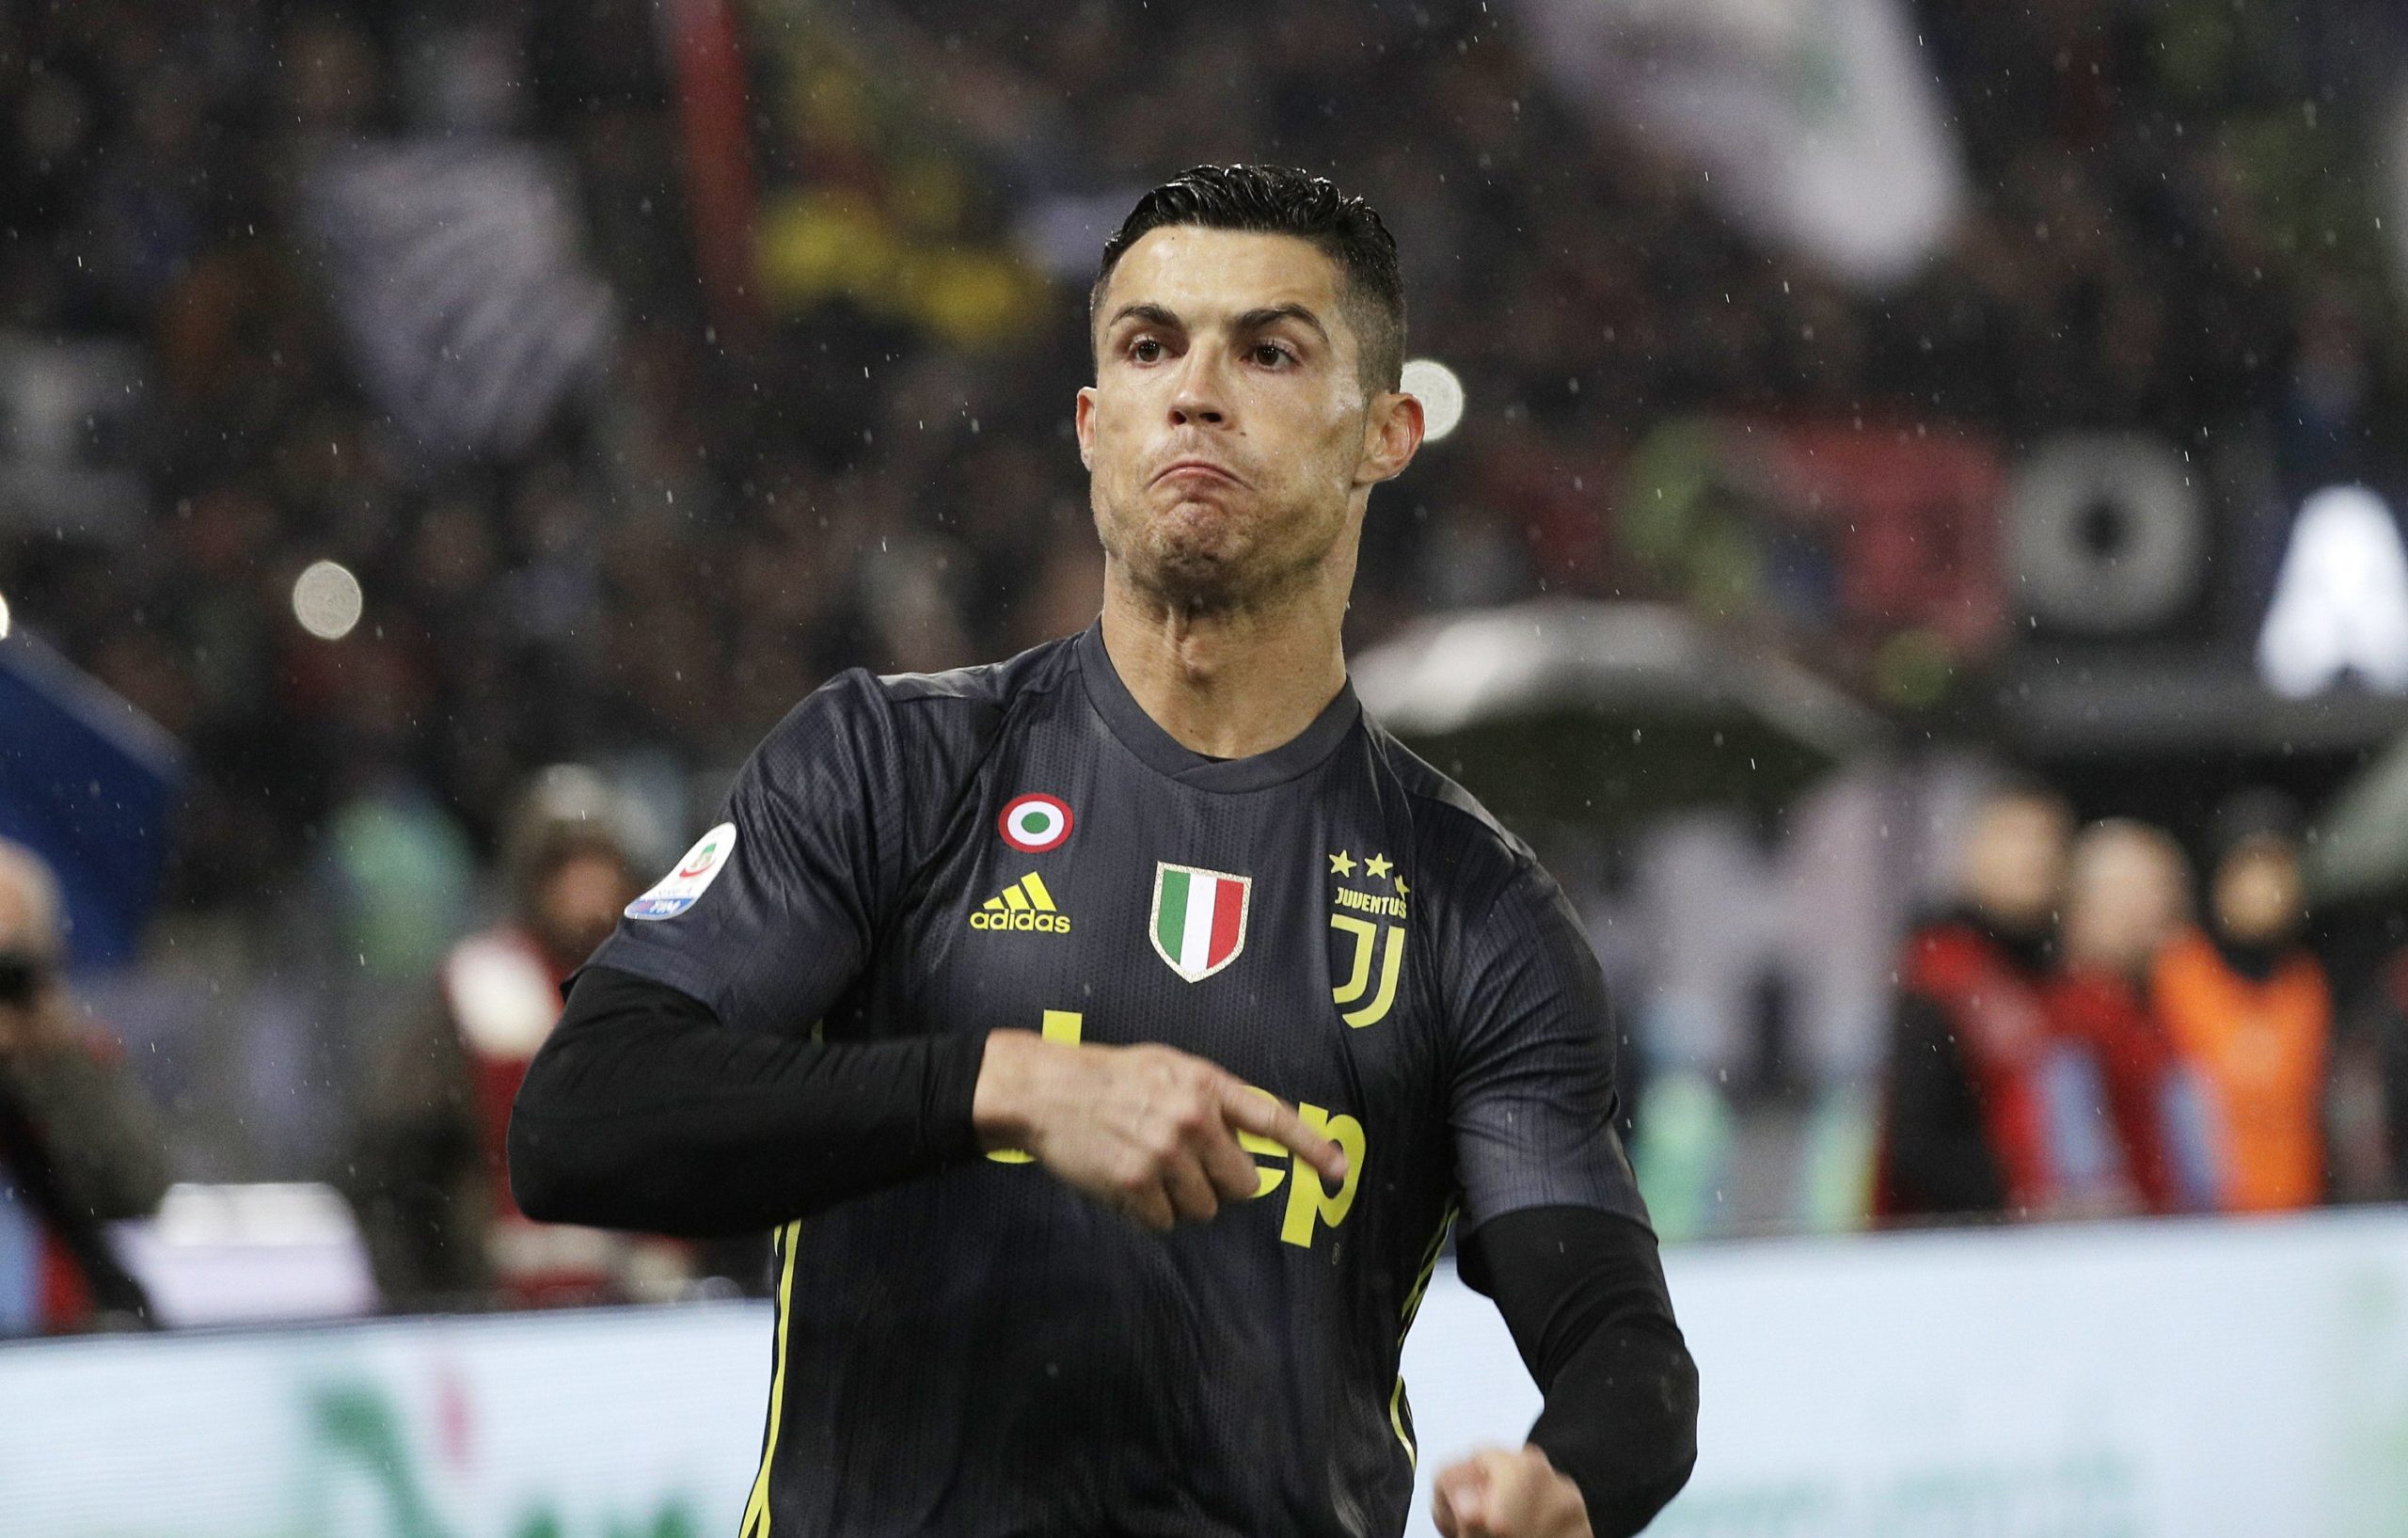 Ronaldo To Blame For Juve’s Early Season Struggle - Chiellini